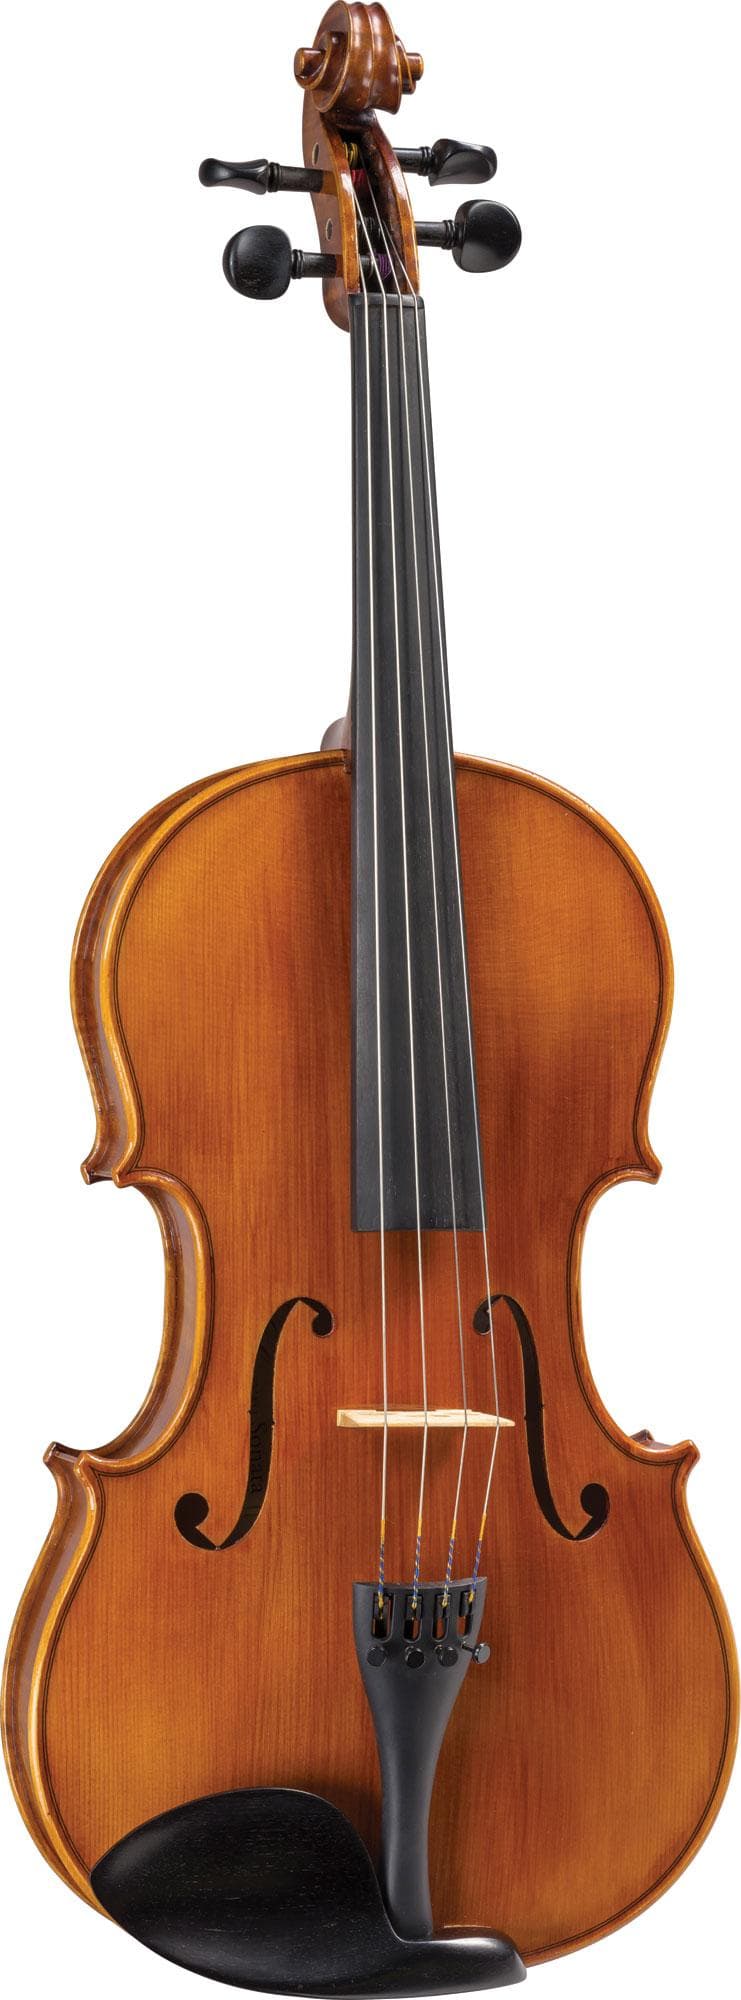 Carlo Lamberti™ Sonata Viola - Instrument Only